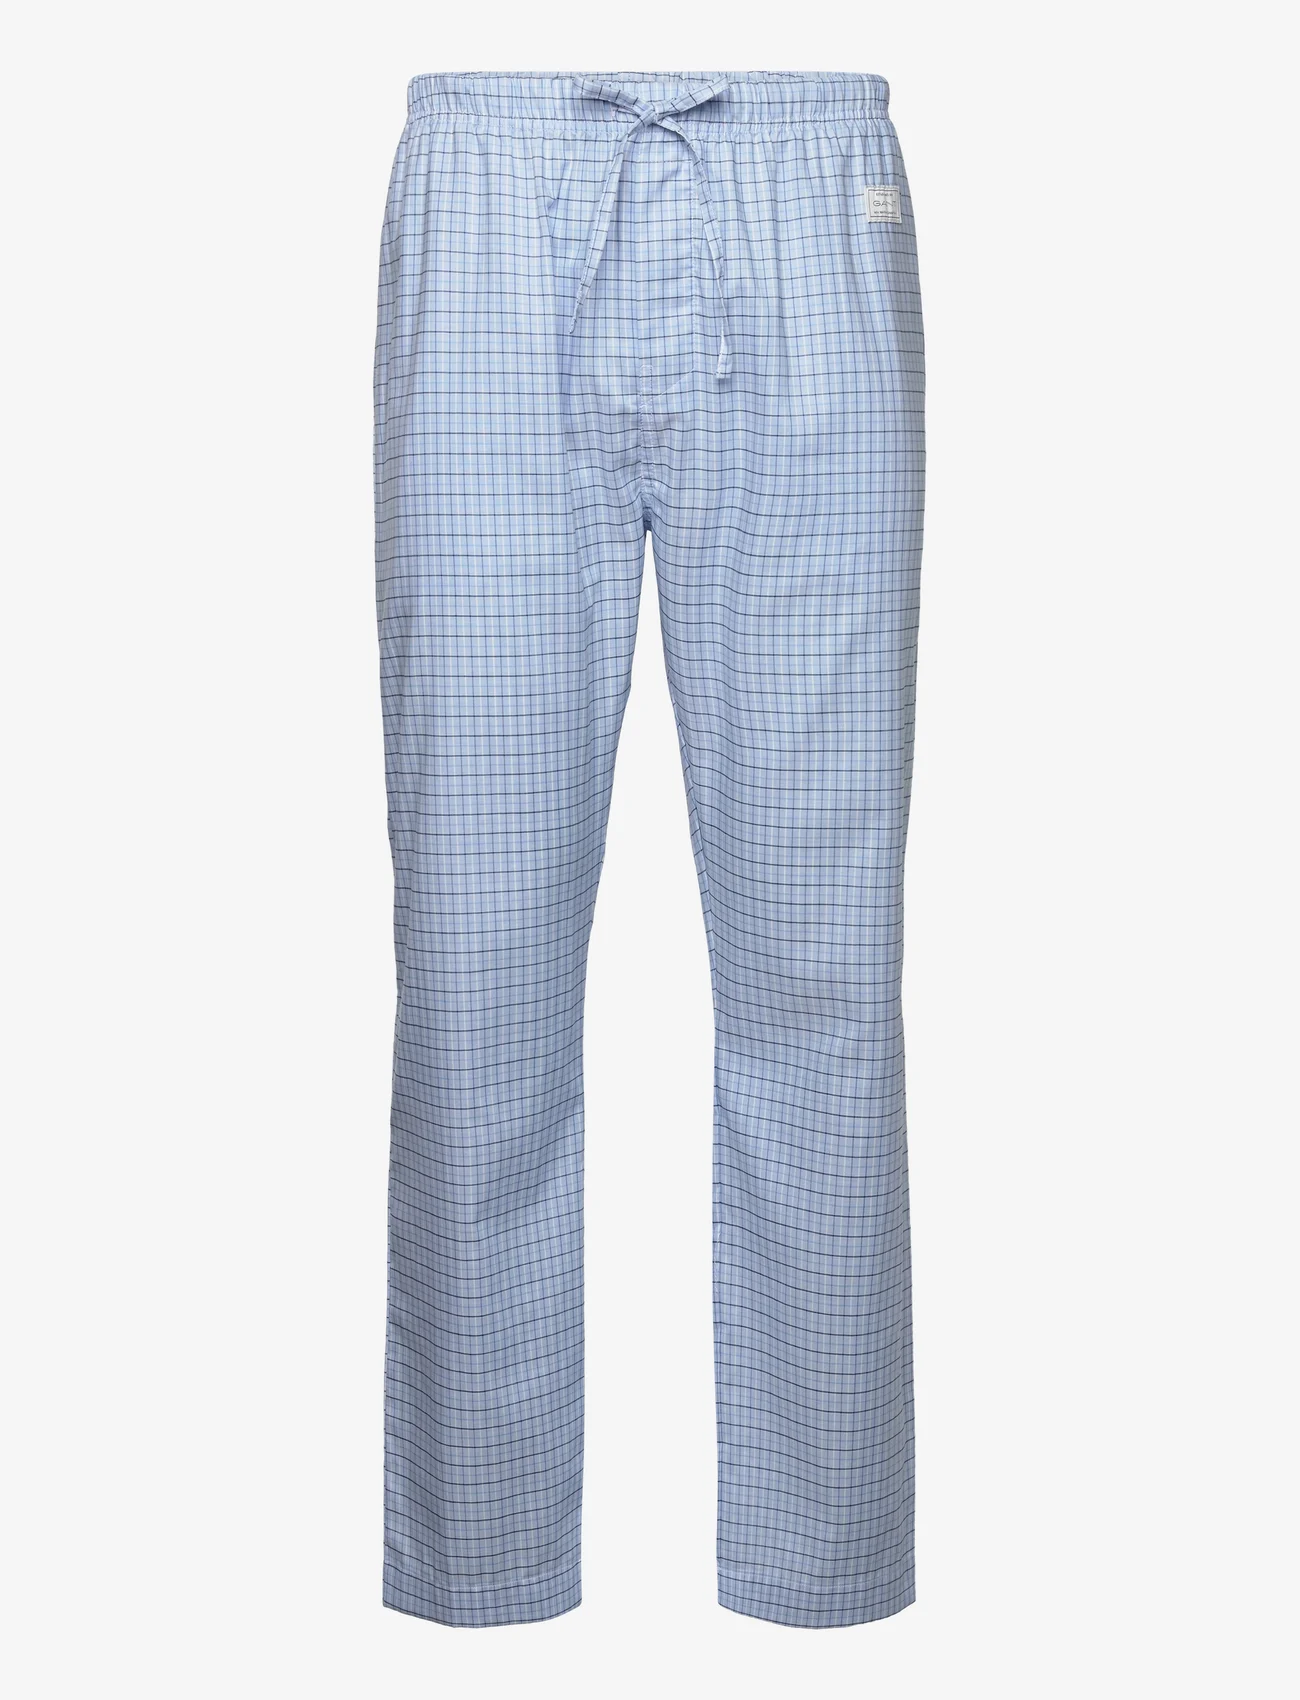 GANT - CHECK PAJAMA PANTS - pyjamahousut - capri blue - 0